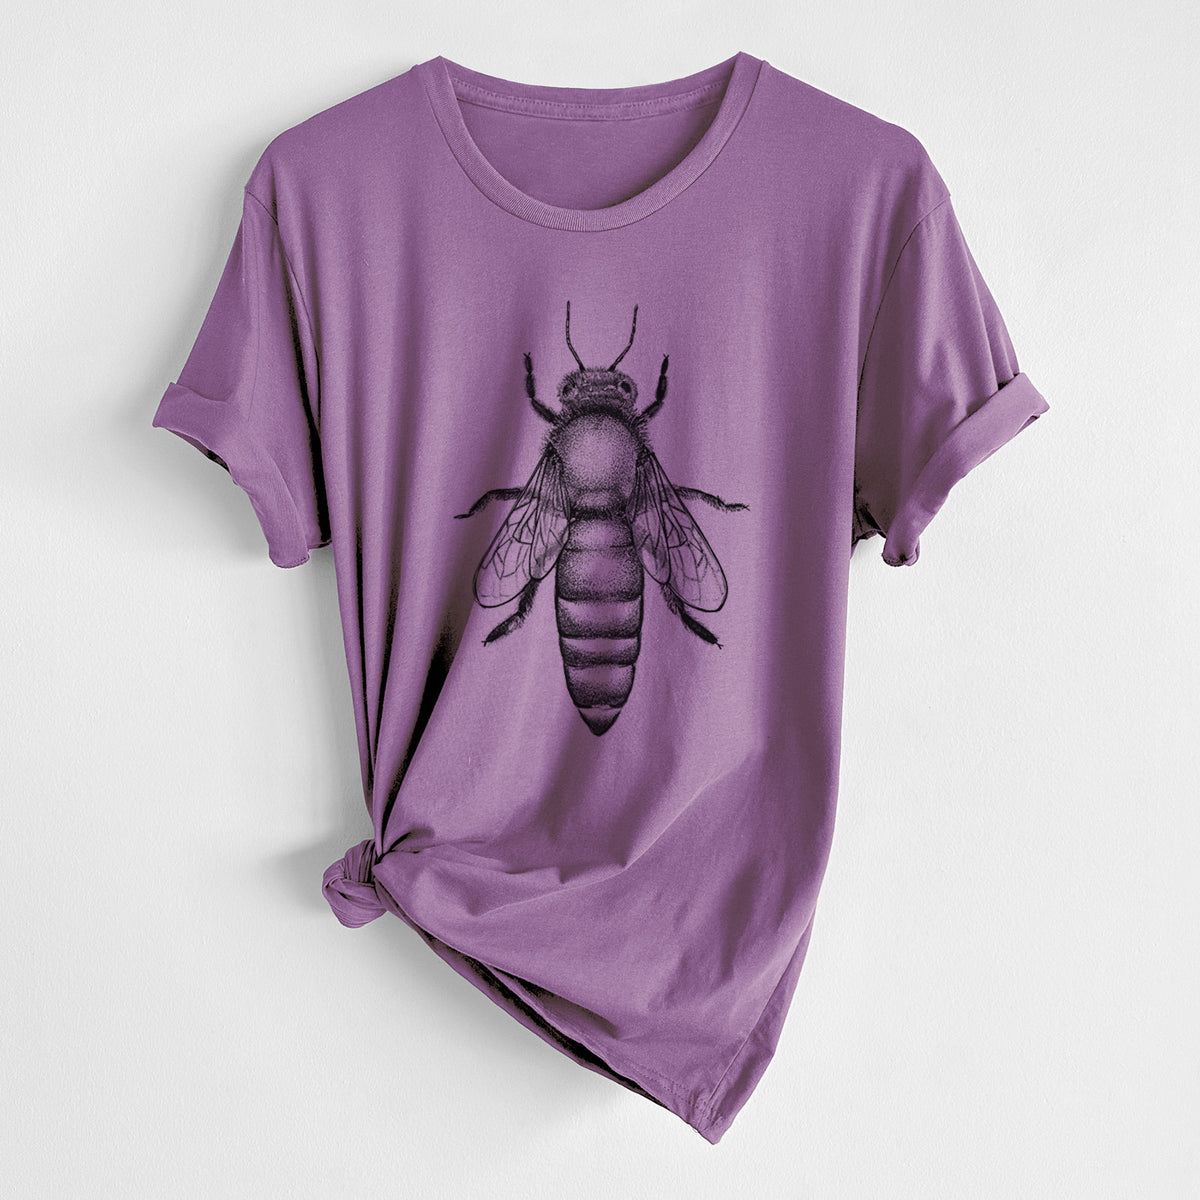 Queen Bee Apis Mellifera - Unisex Crewneck - Made in USA - 100% Organic Cotton